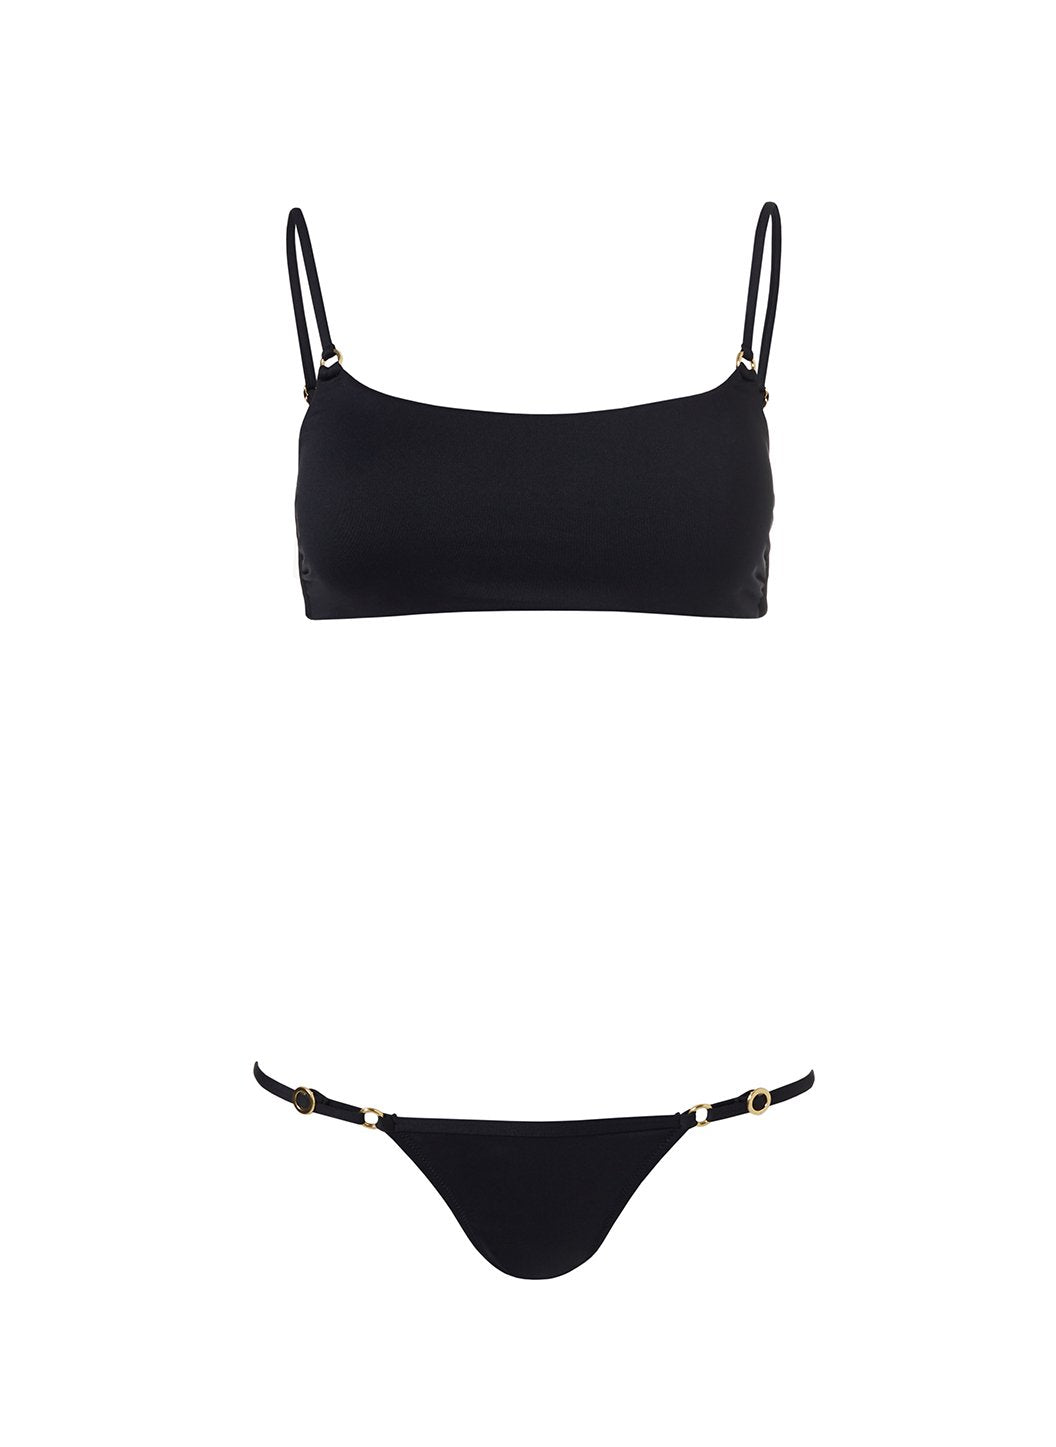 Capri Black Bikini